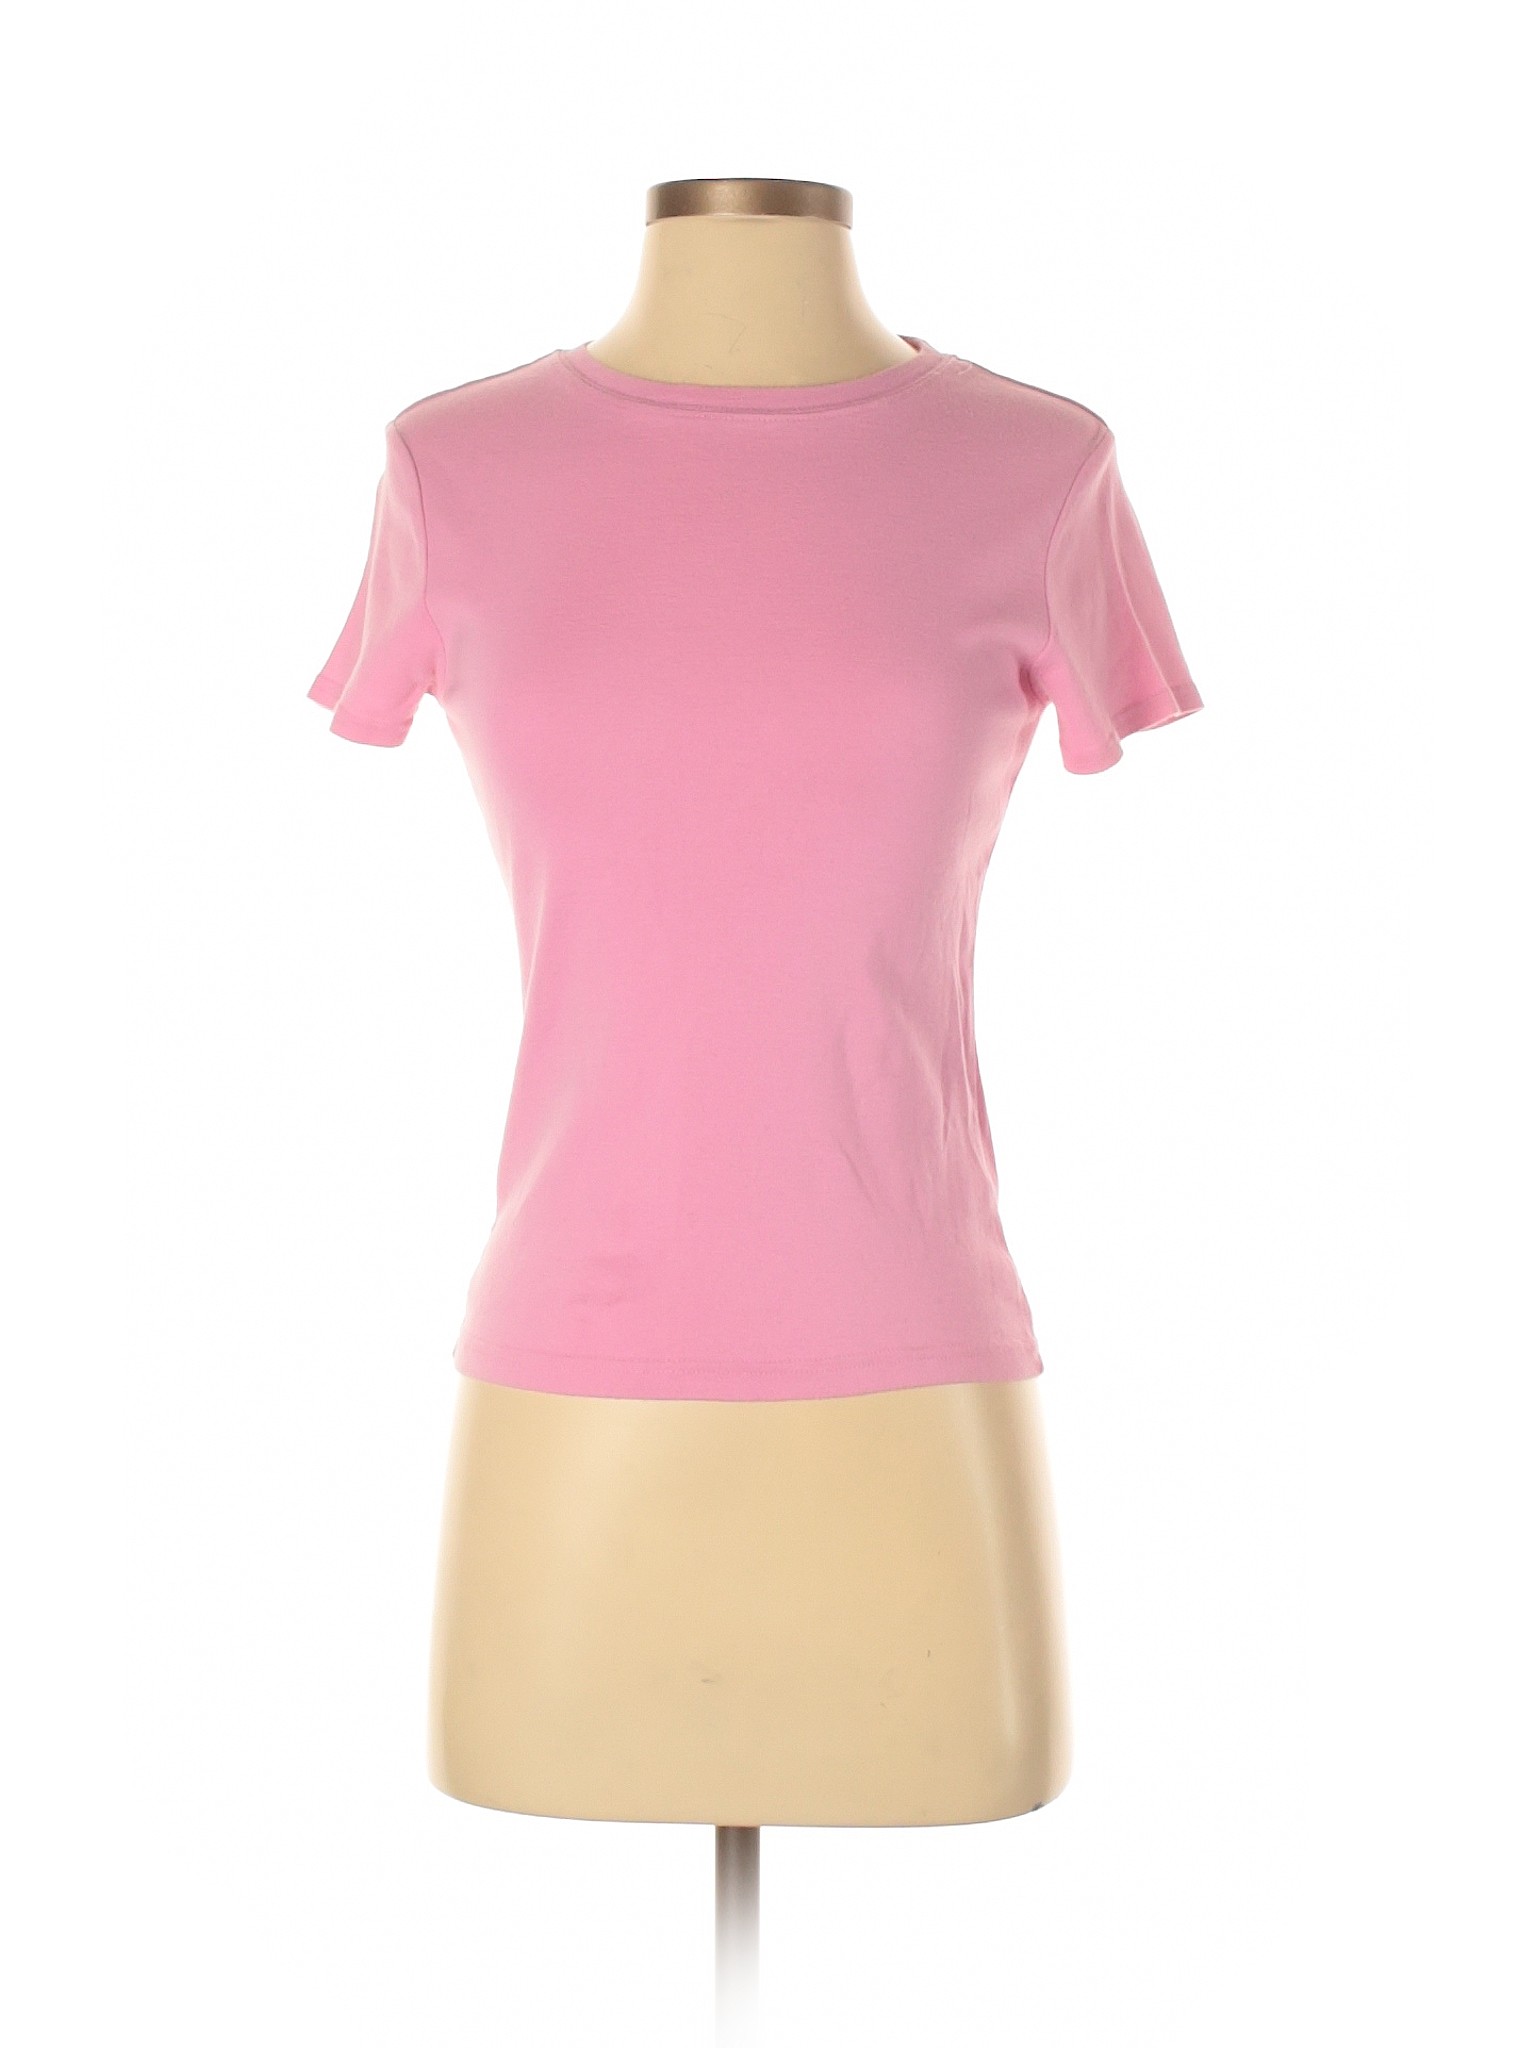 Club Monaco Women Pink Short Sleeve T-Shirt S Petites | eBay